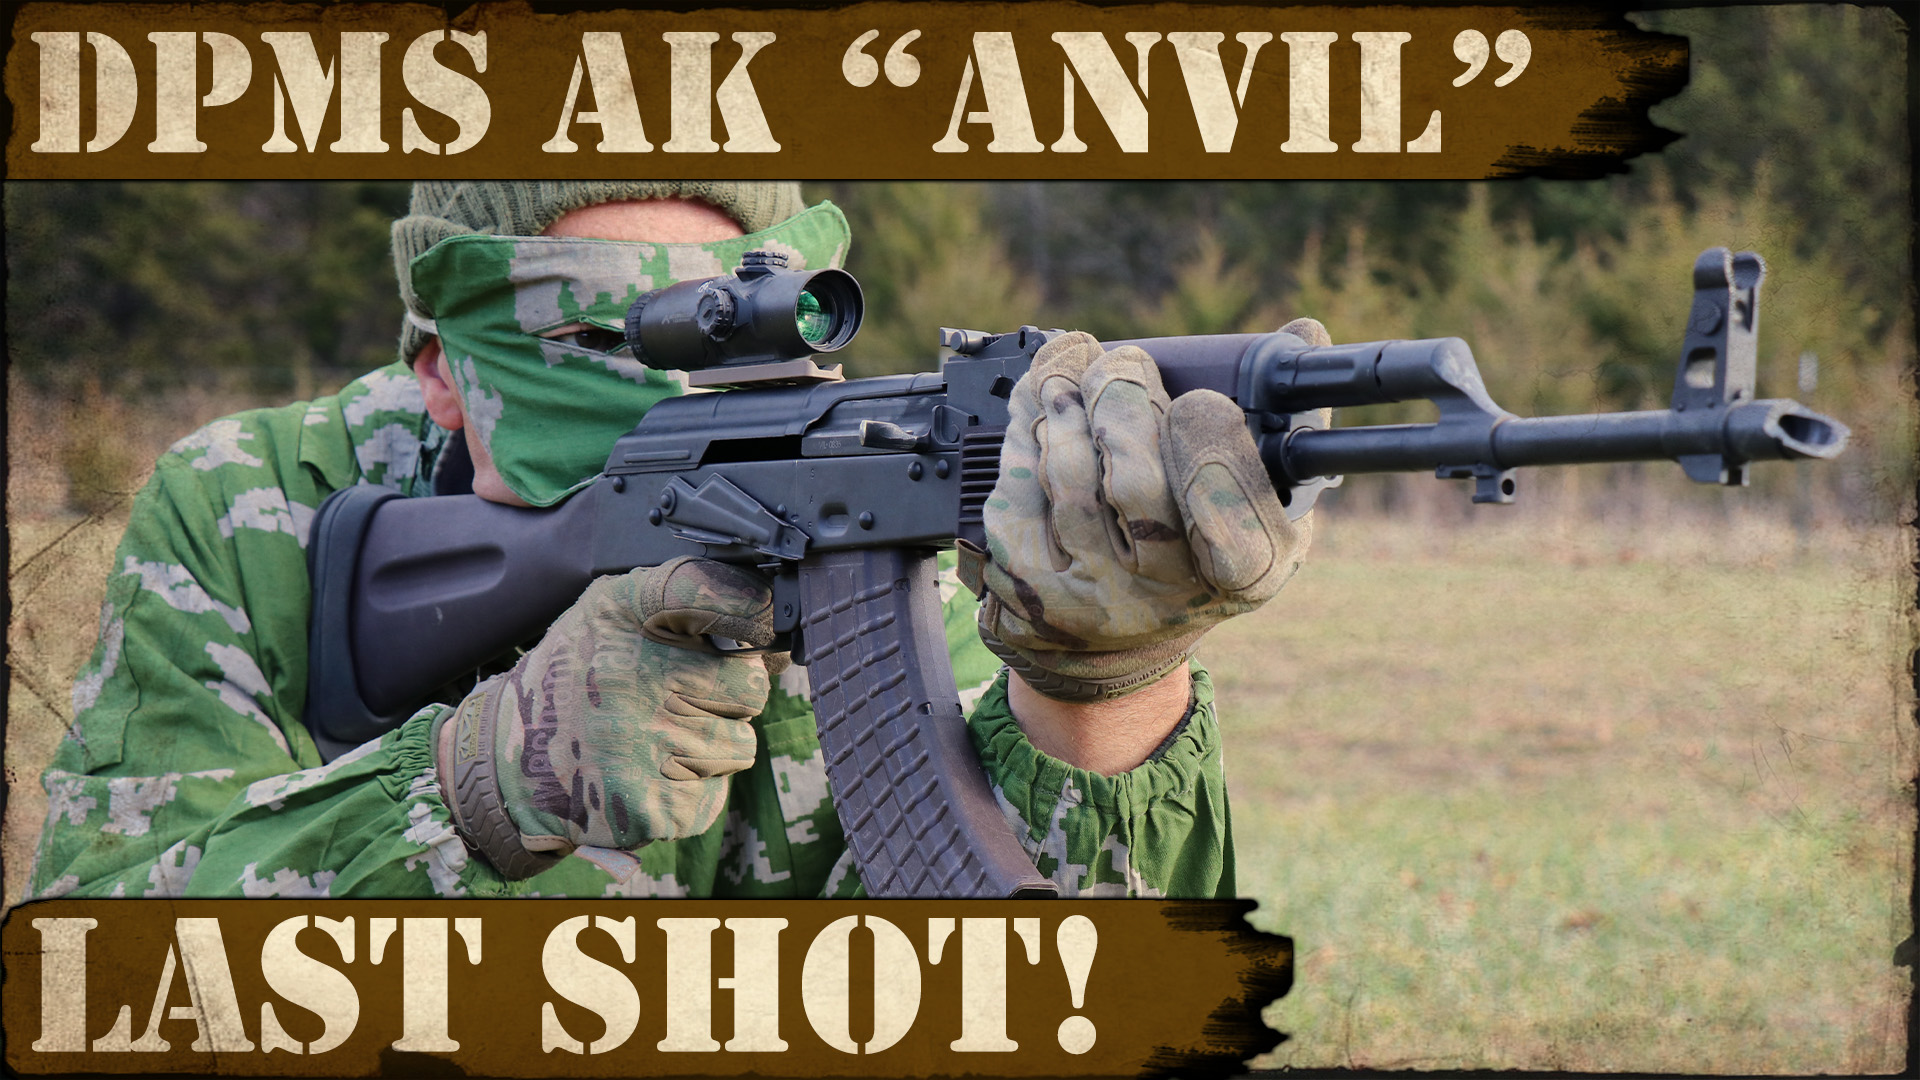 DPMS AK “Anvil” – Last Shot!